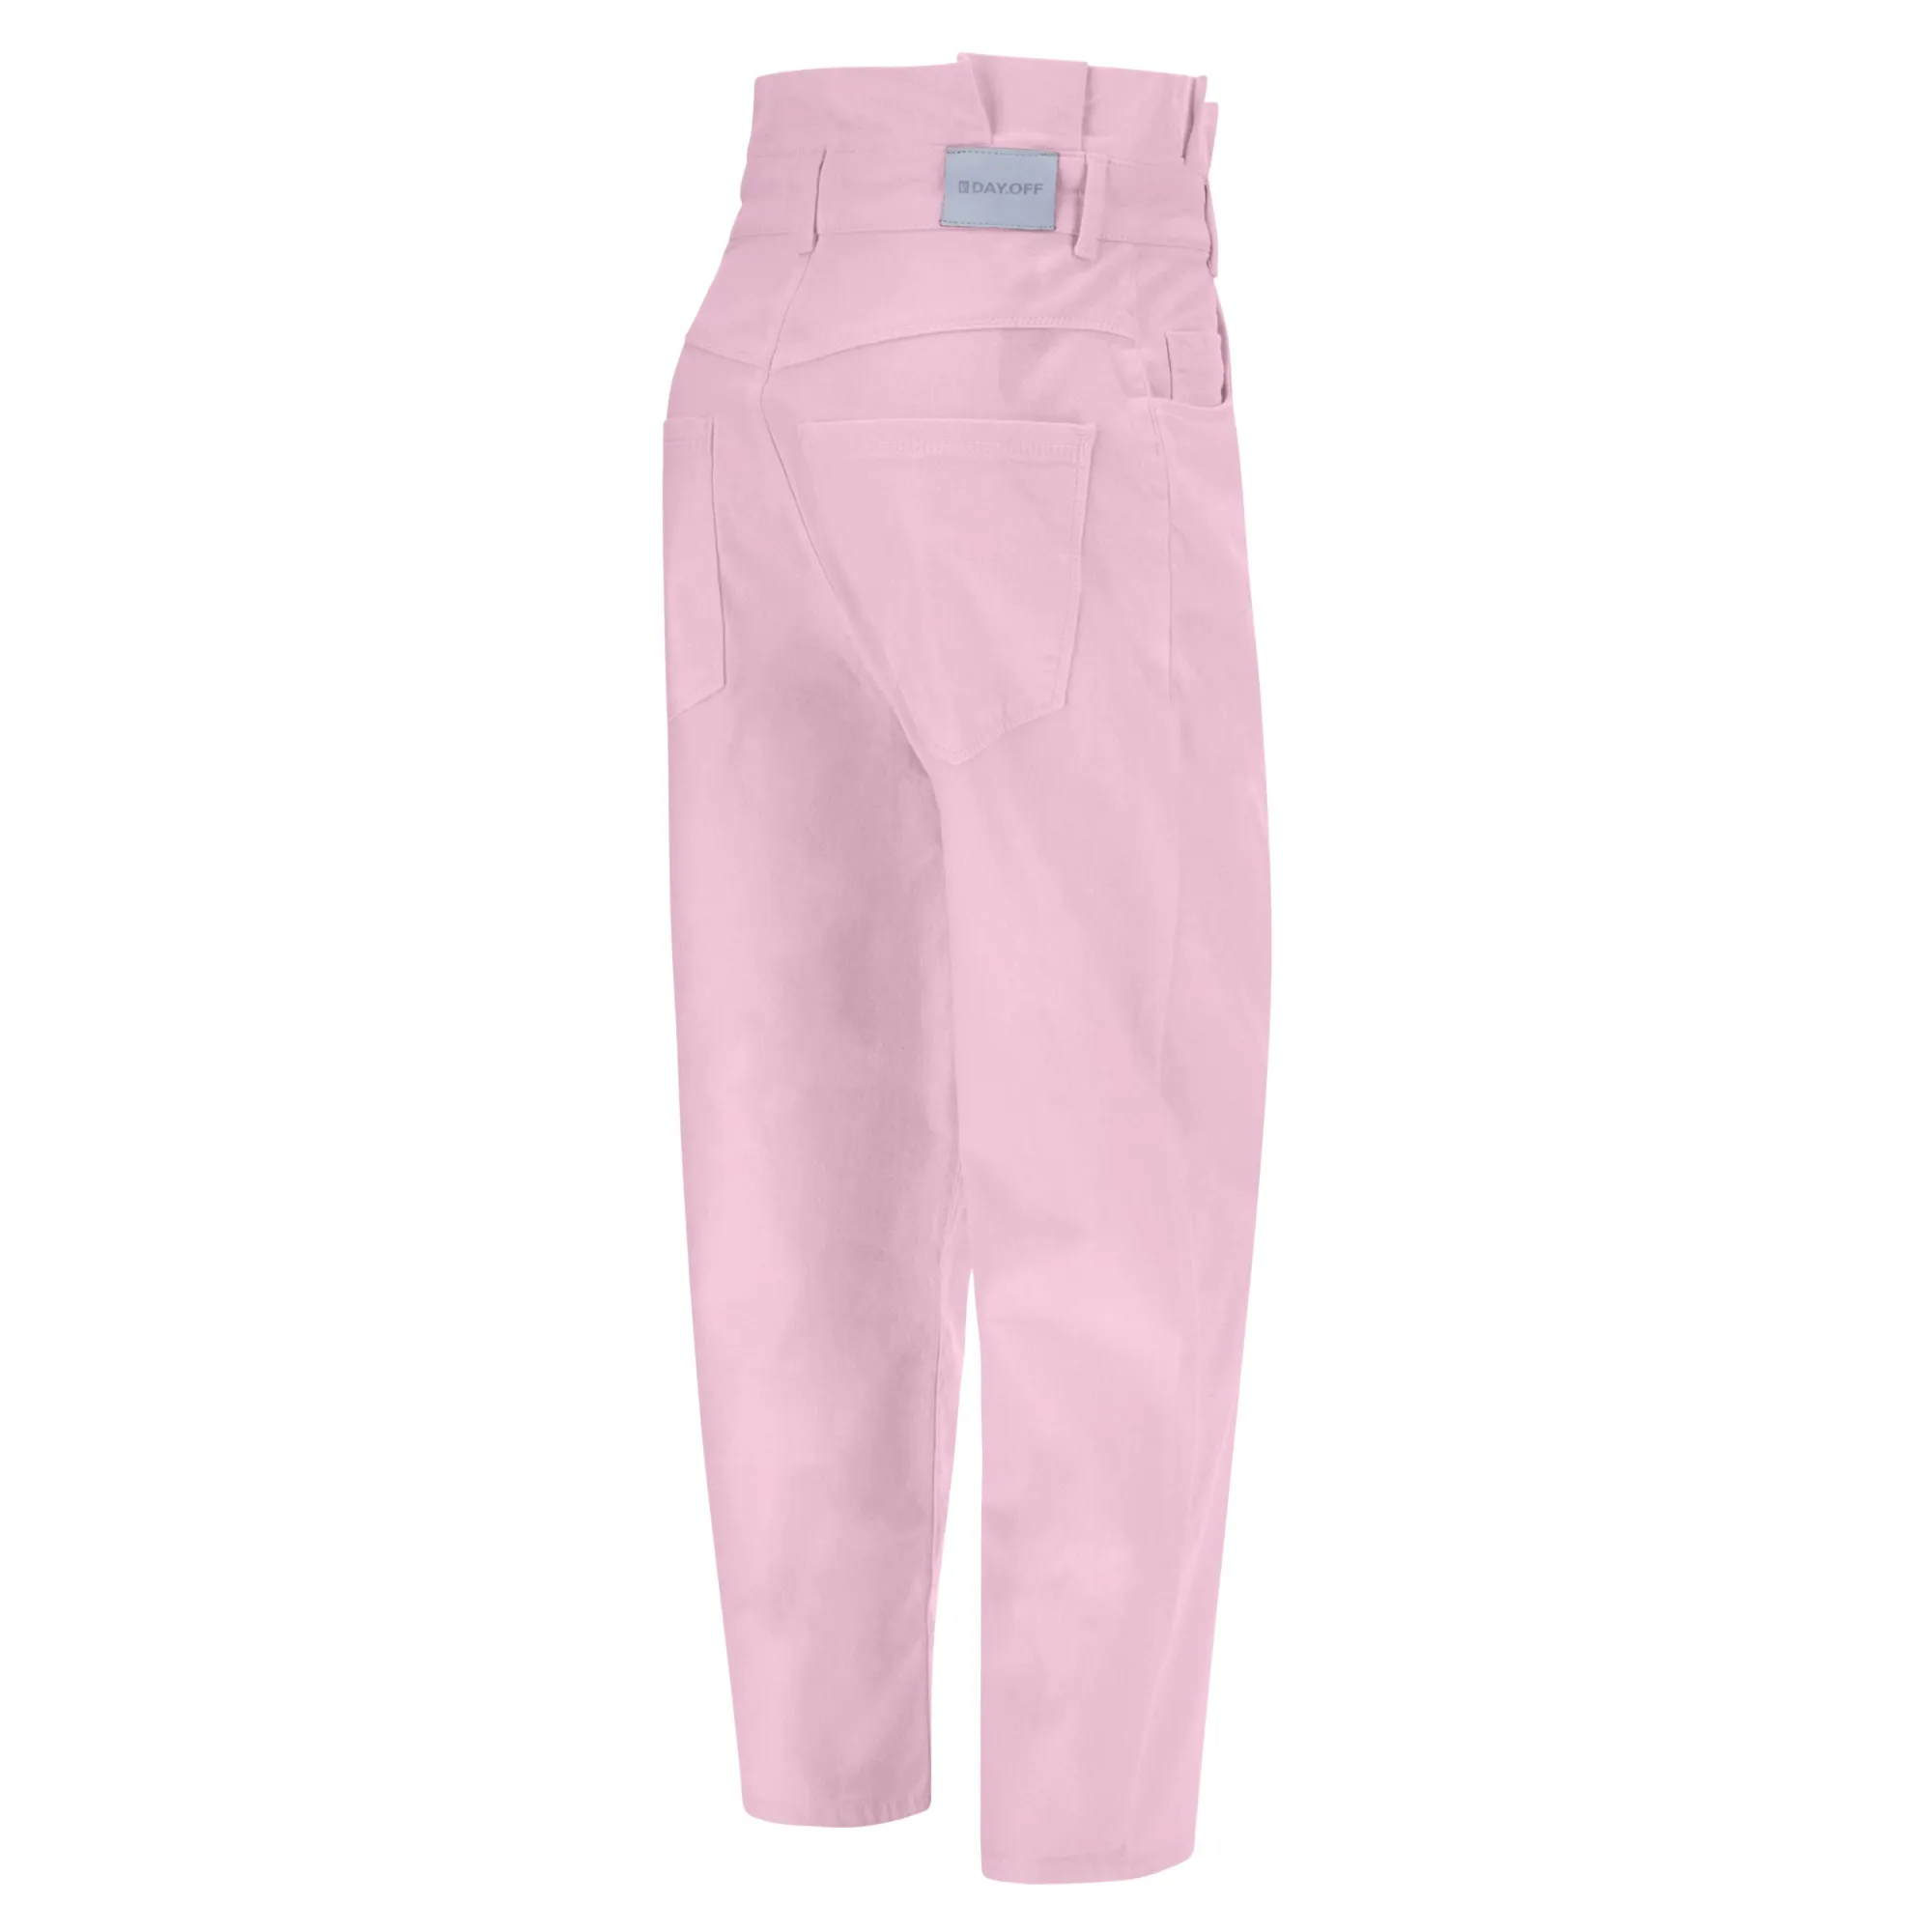 Freddy Damen Carrot Jeans - Geraffter Saum - Garment Dyed  - Direct Dyed - Pink - P89X